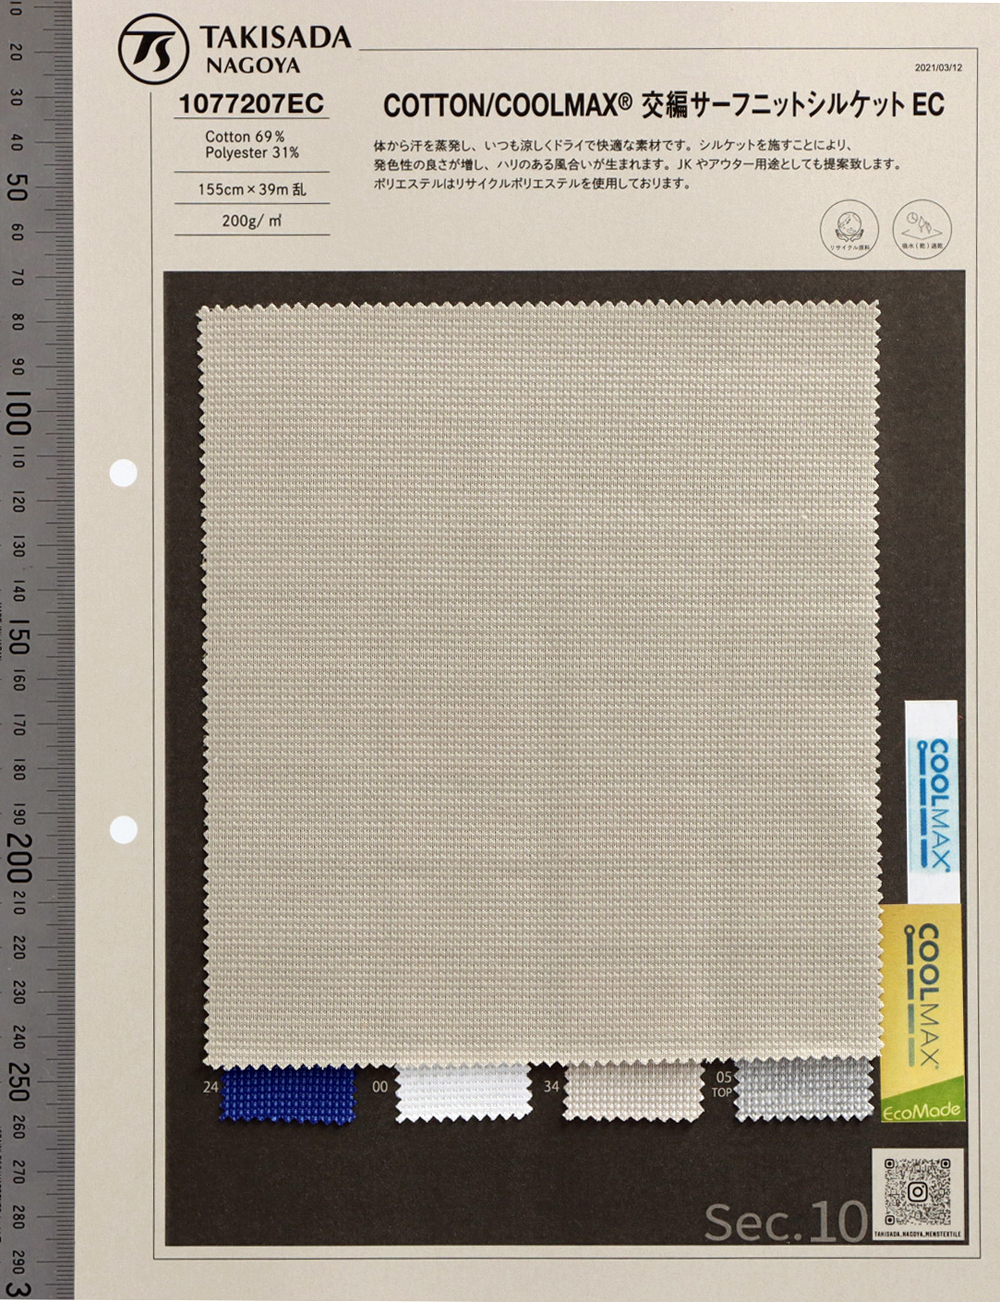 1077207EC COTTON / COOLMAX® Cross-knit Surf Knit Mercerized EC[Textilgewebe] Takisada Nagoya